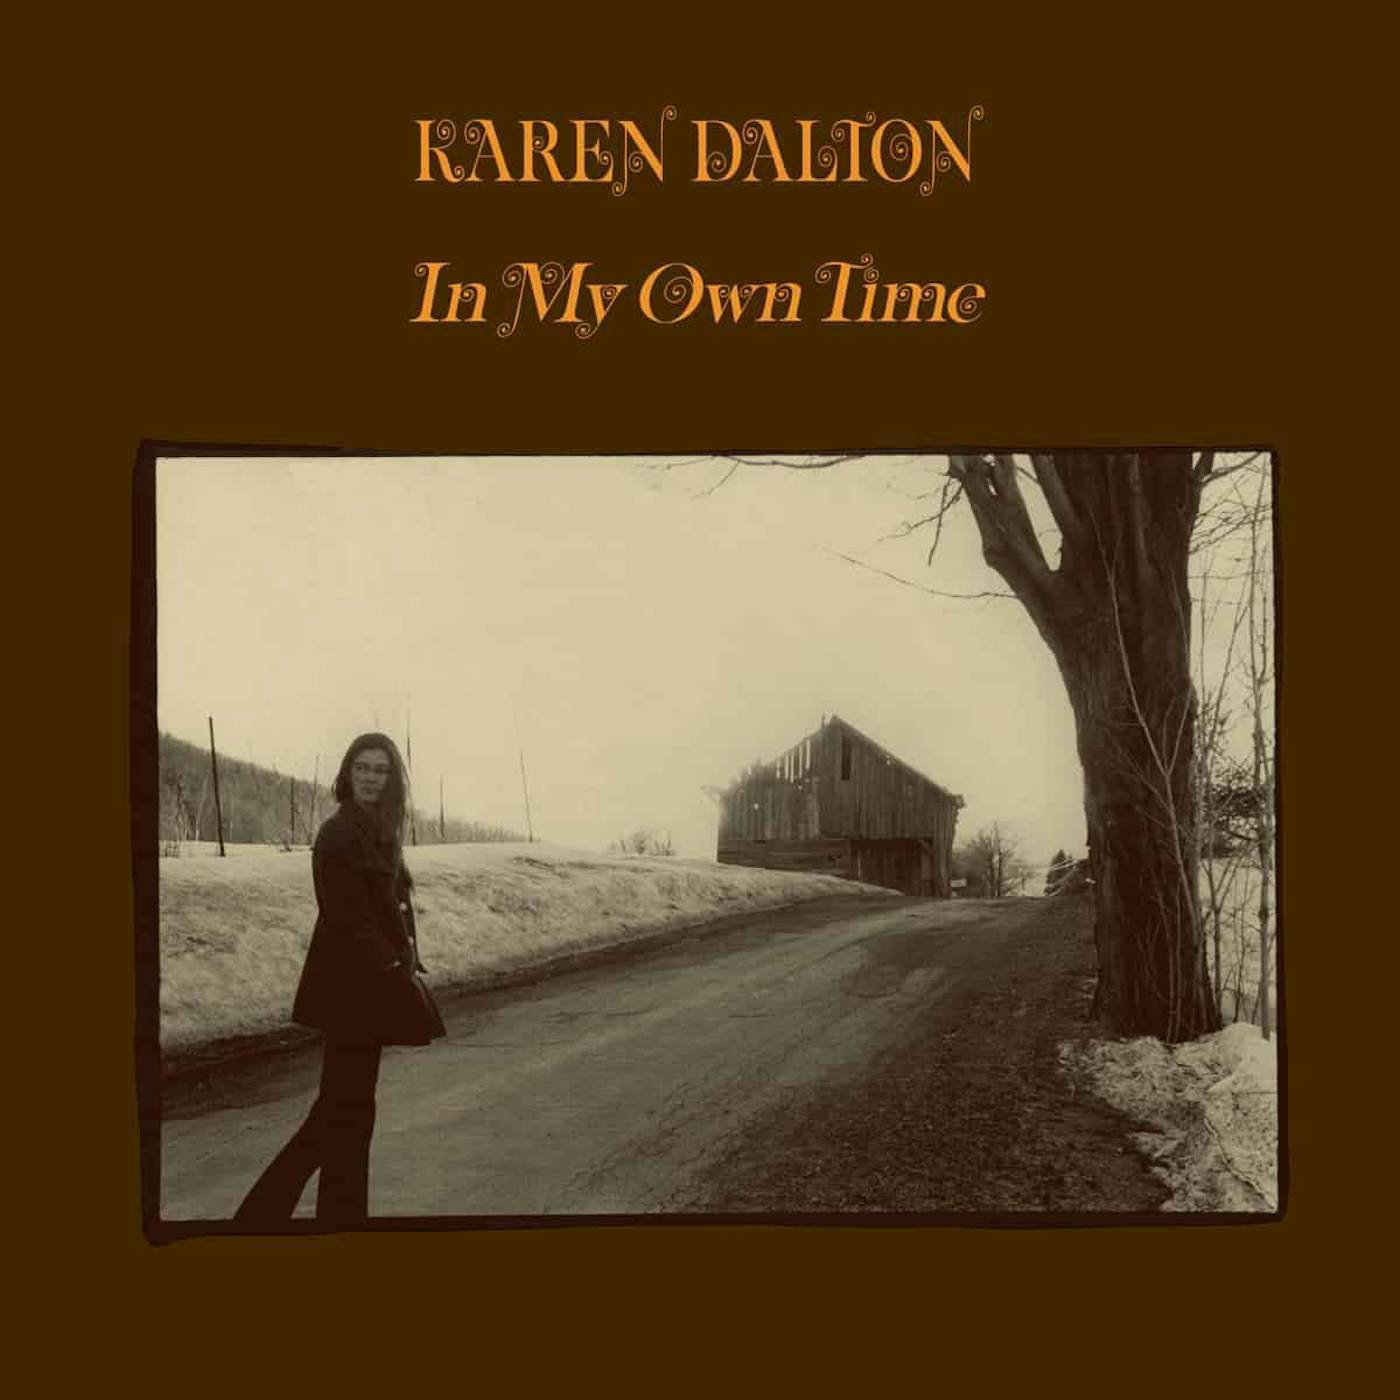 Karen Dalton In My Own Time (50th Anniversary Edition) Vinyl Record